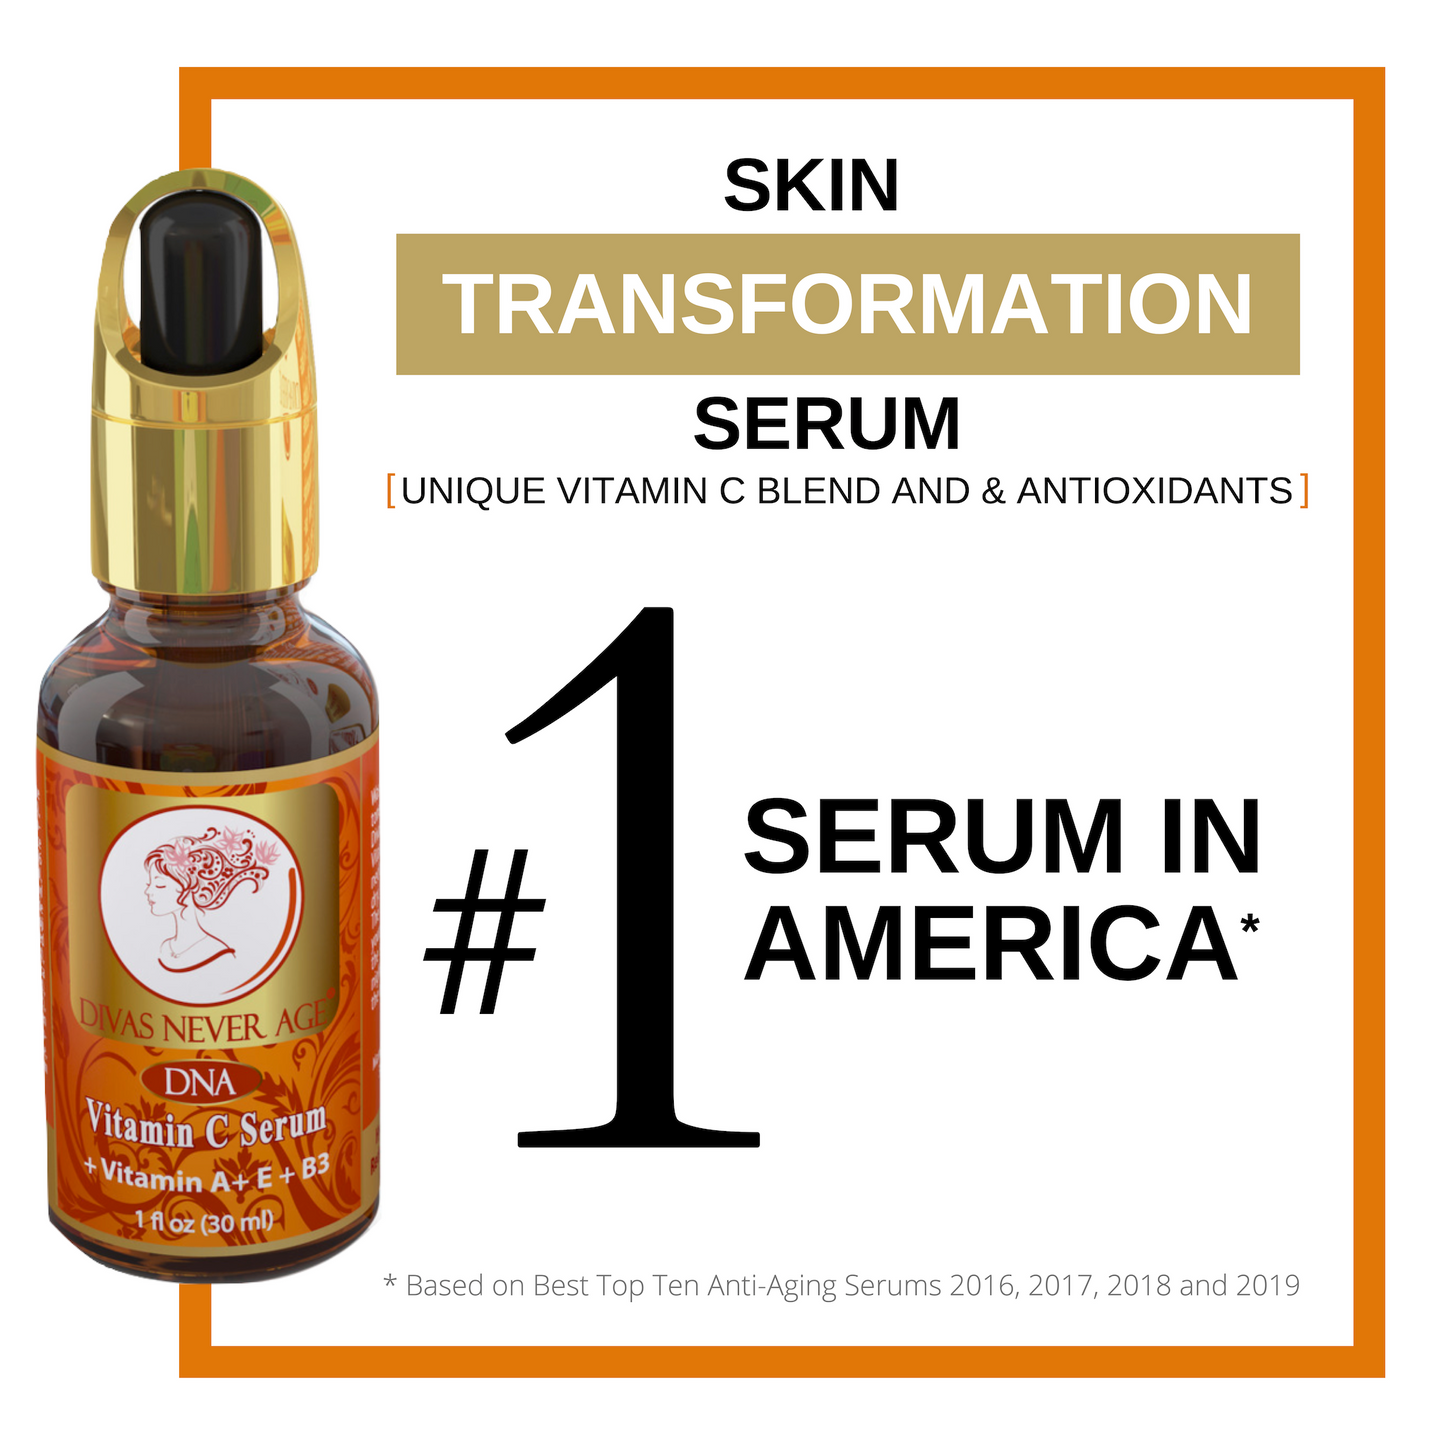 Divas Never Age Vitamin C serum, number 1 serum in America. Skin transformation moisturizer with hyaluronic acid and vitamin C.